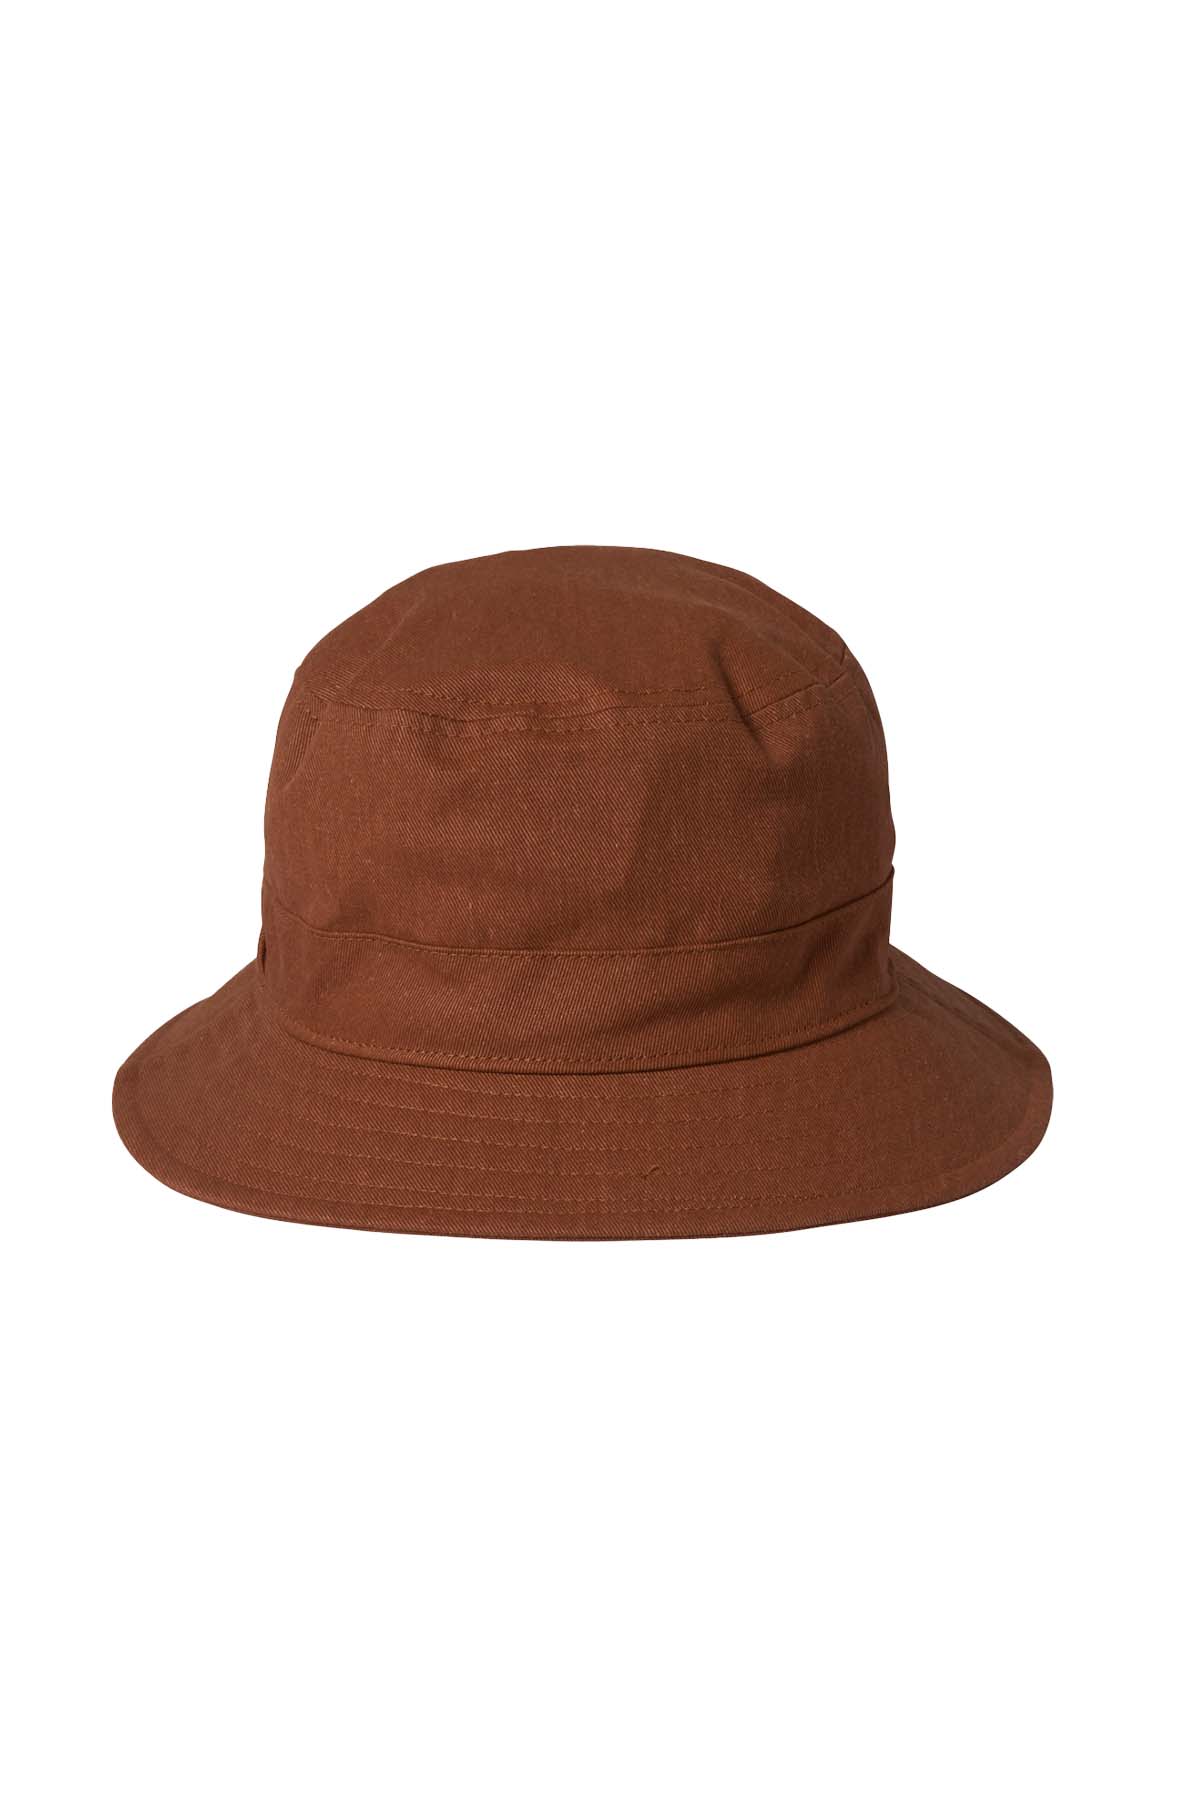 Brixton - Woodburn Packable Bucket Hat - Terracotta Sol Wash - Back